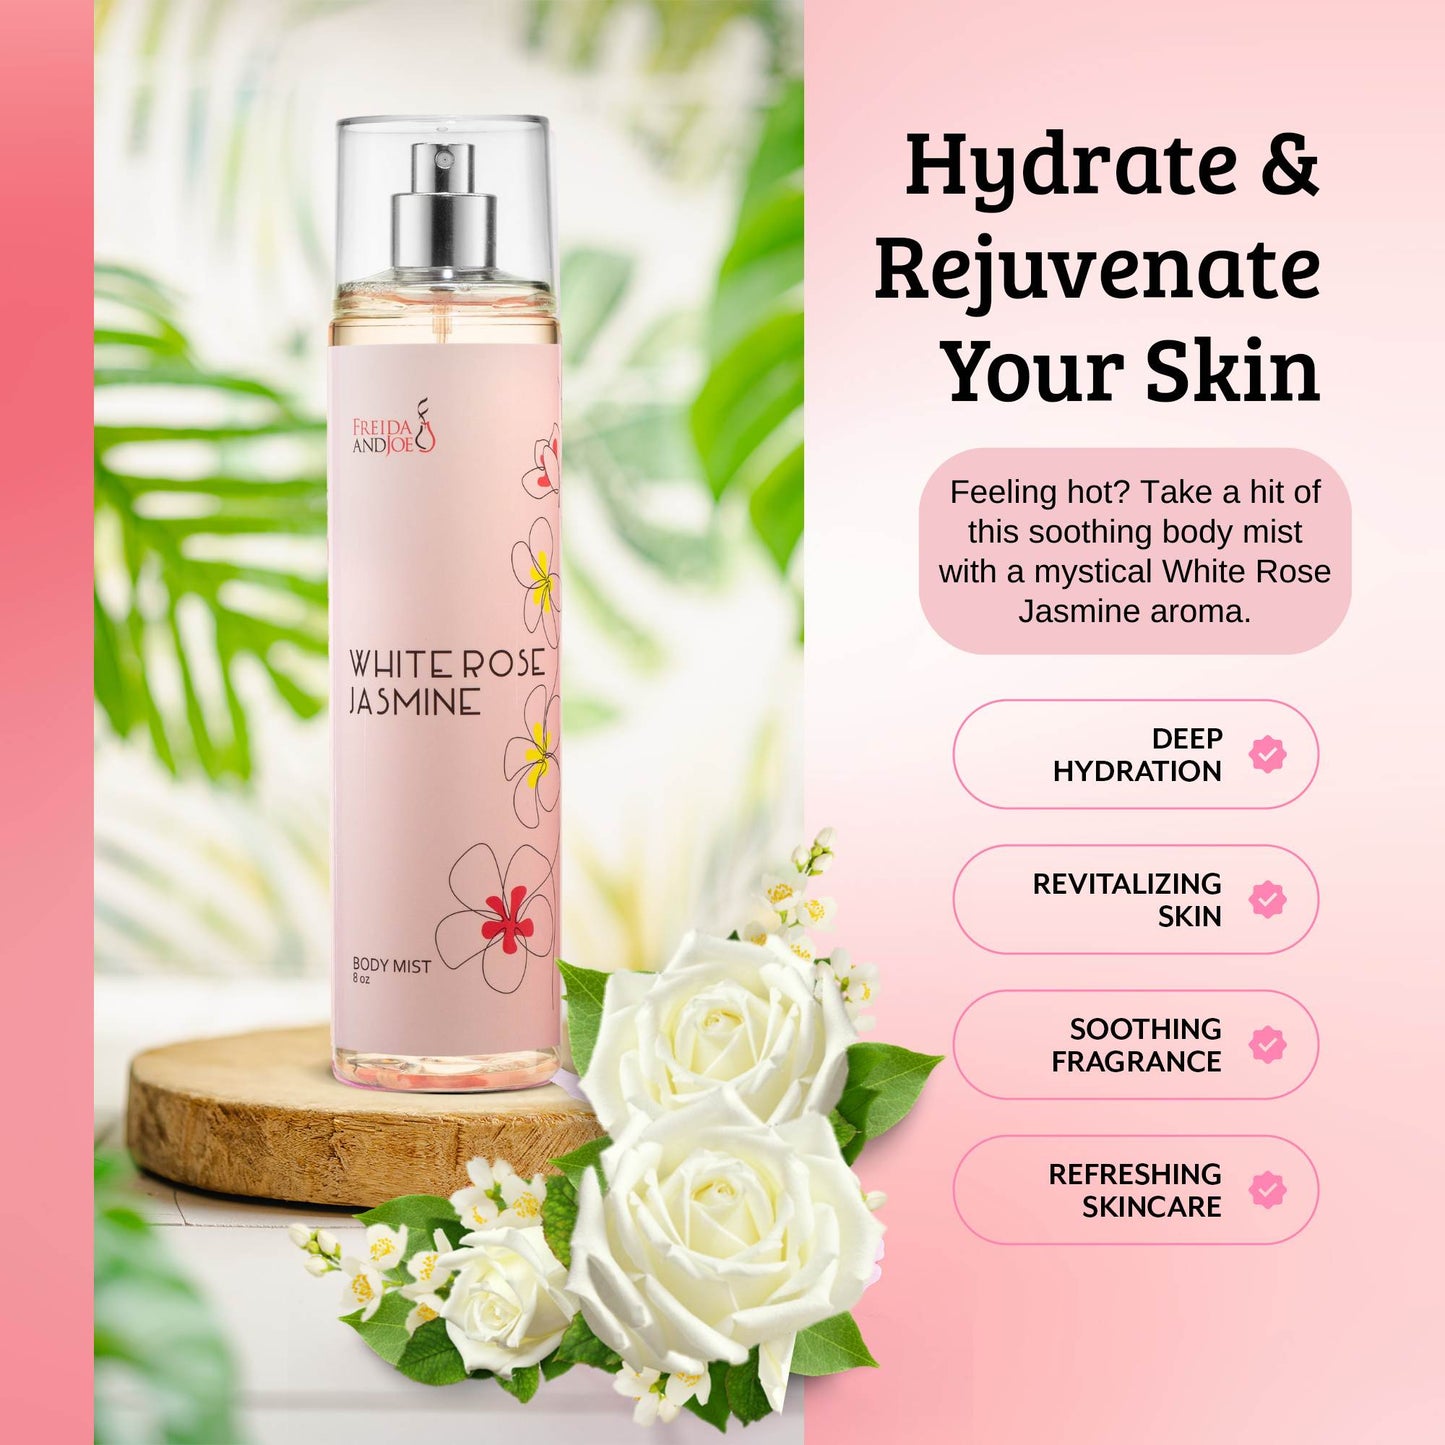 White Rose Jasmine Fragrance Body Mist in 8oz Spray Bottle